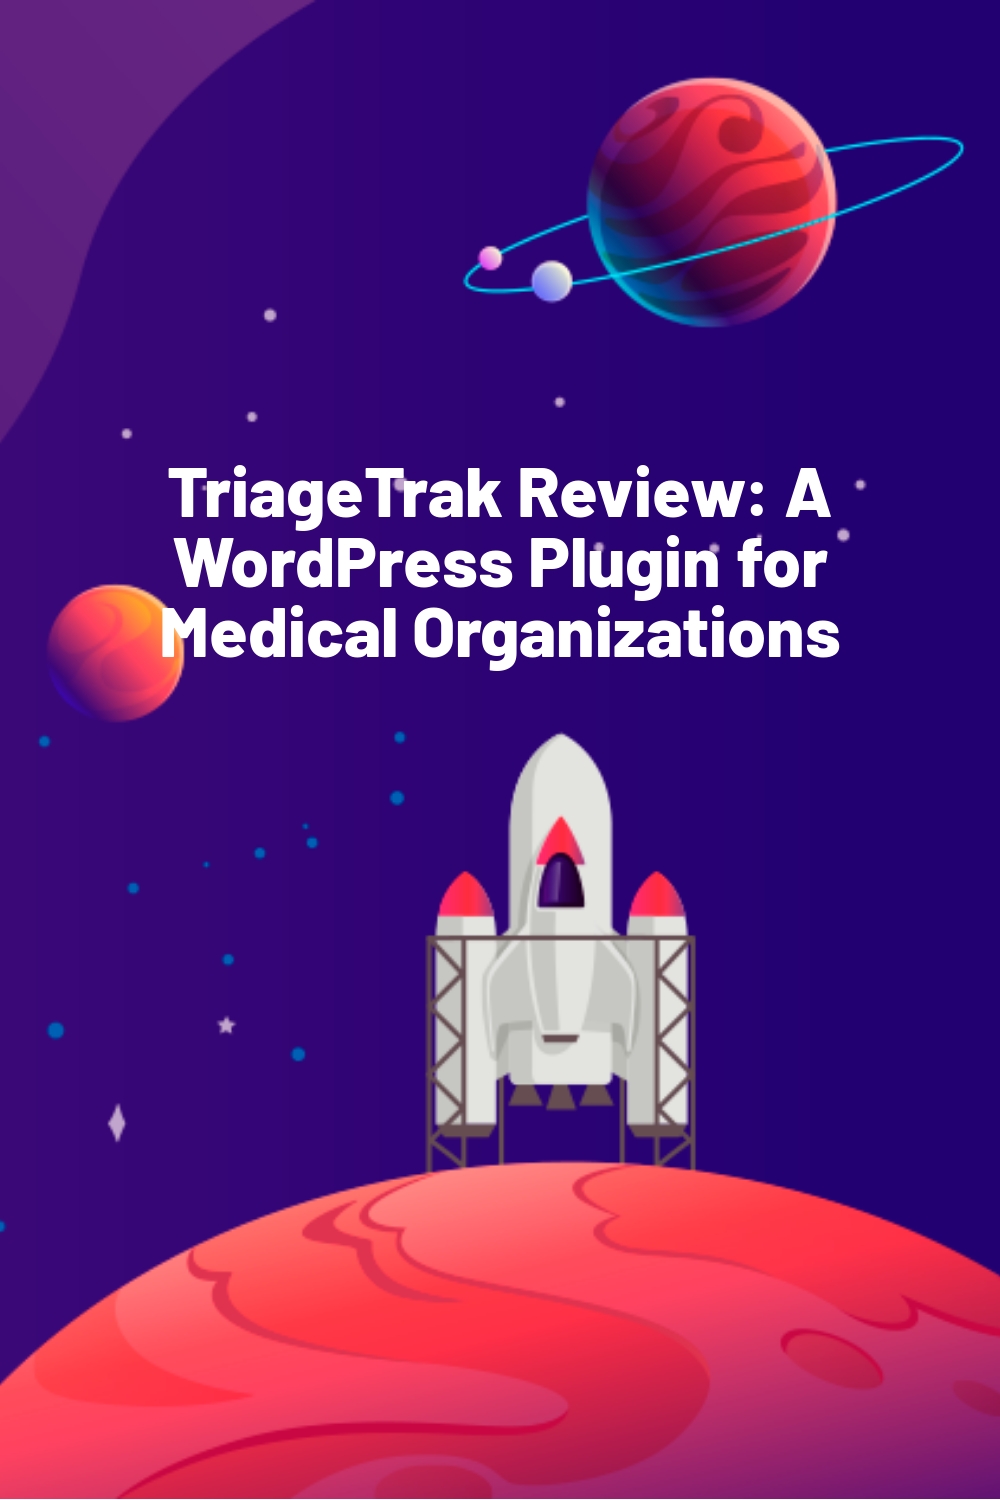 TriageTrak Review: A WordPress Plugin for Medical Organizations